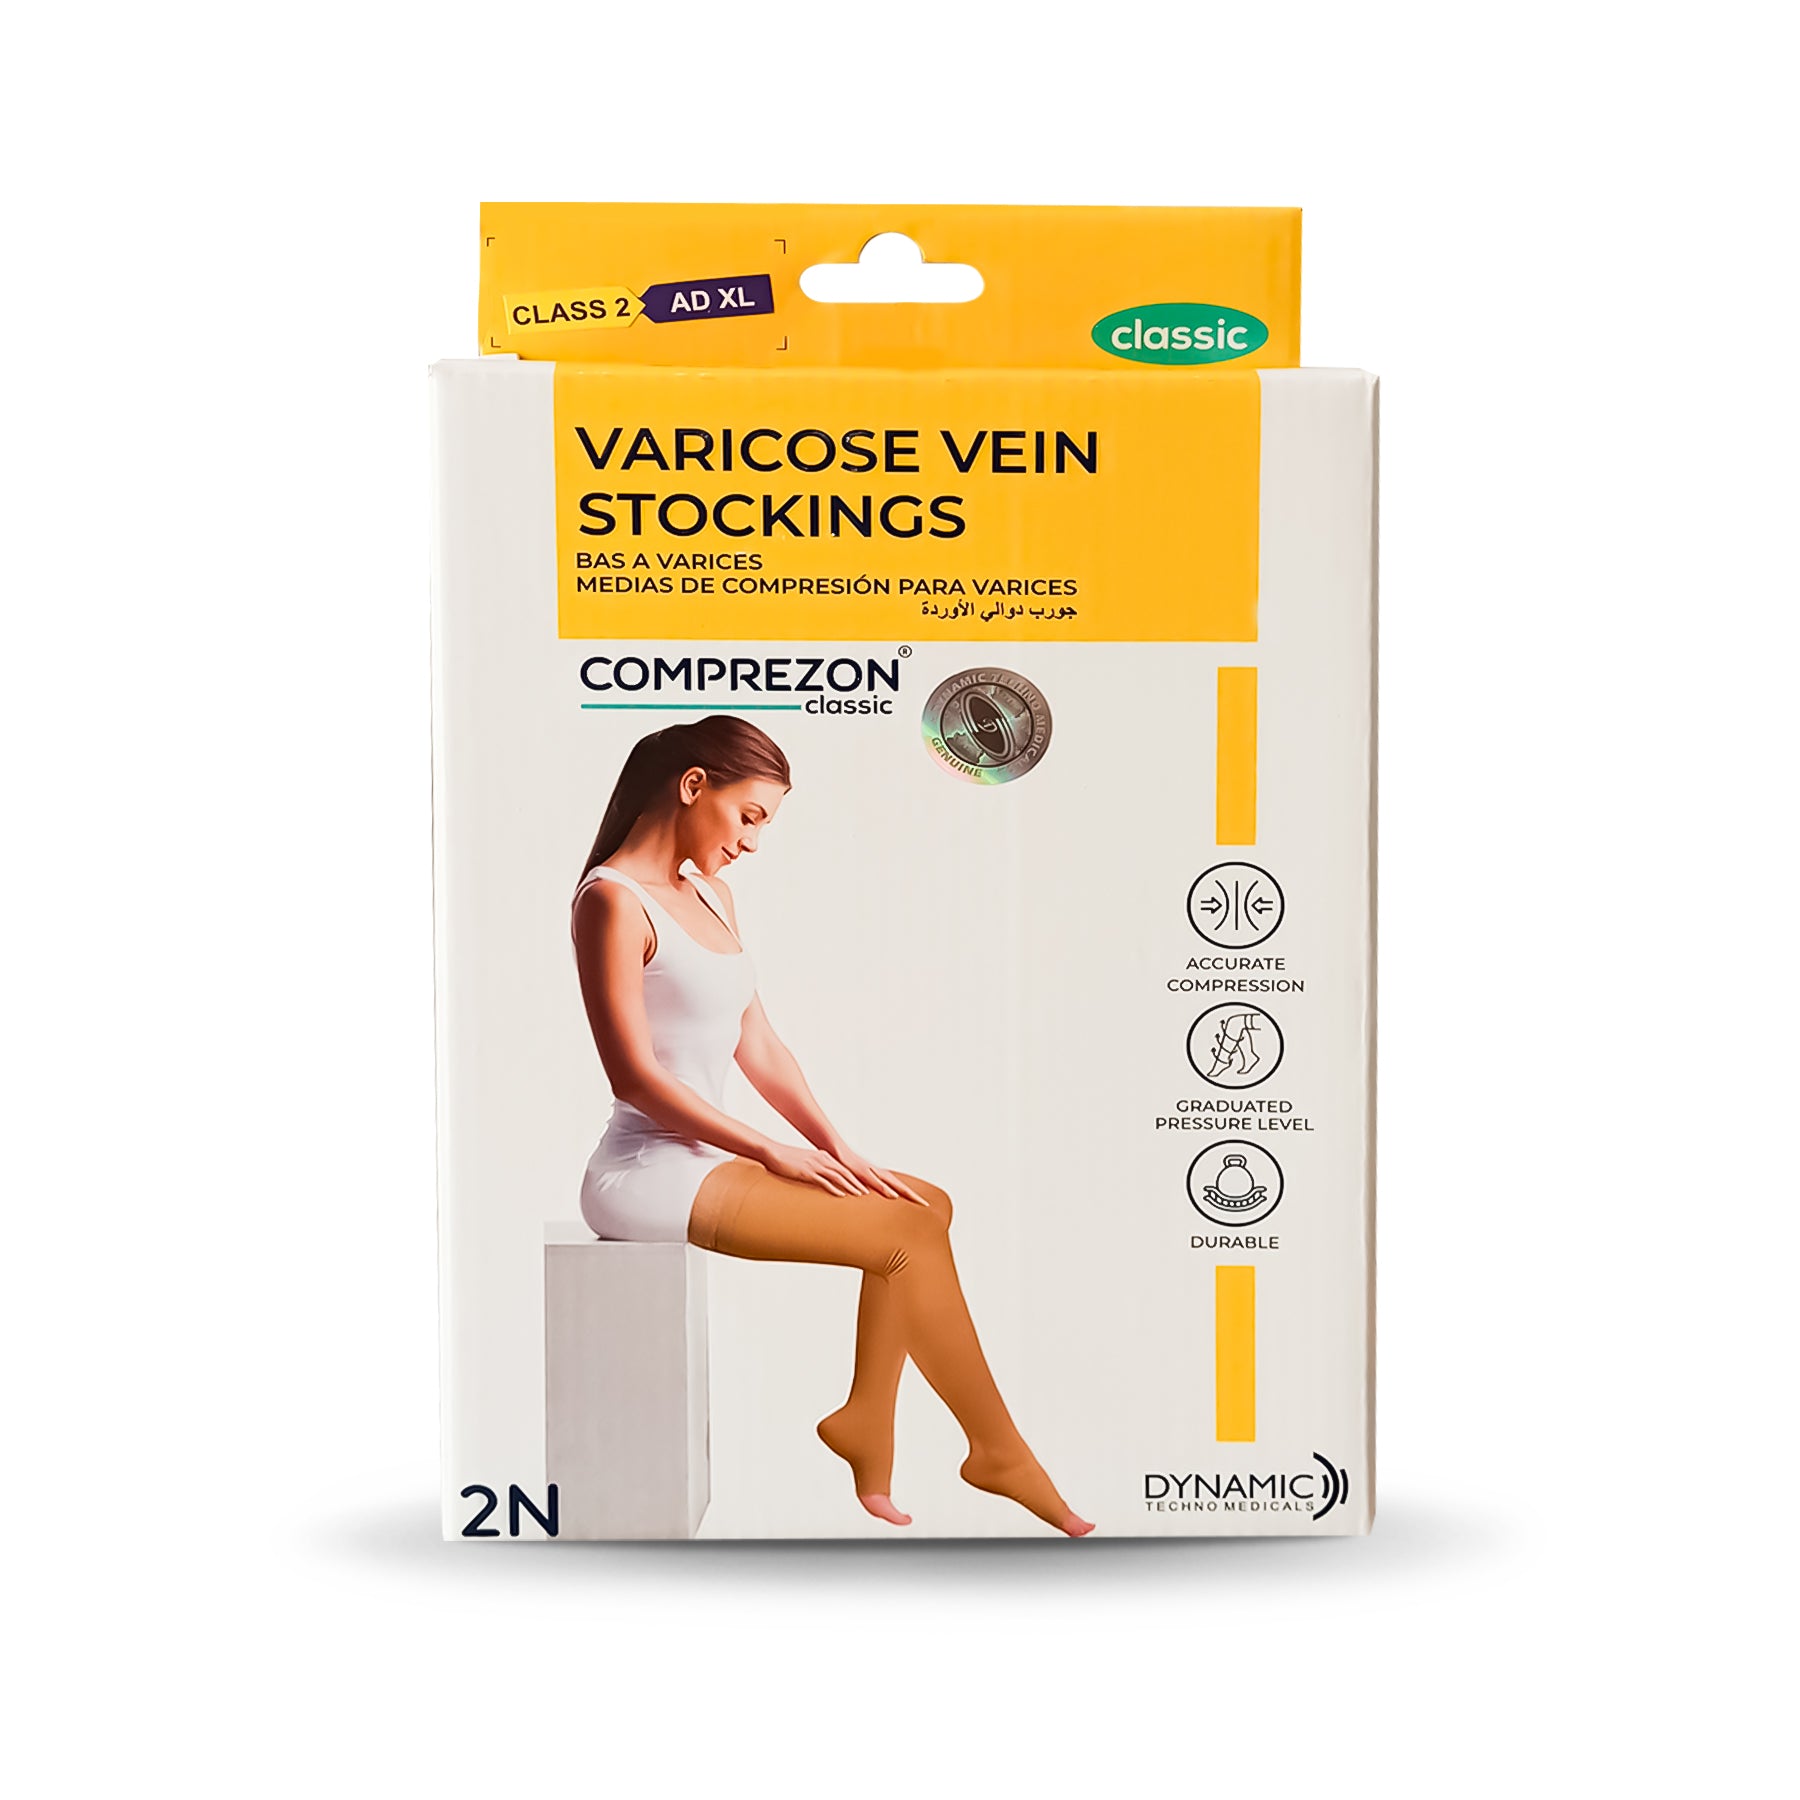 Dyna Comprezon Varicose Vein Stockings Class 2 Below Knee- 1 pair